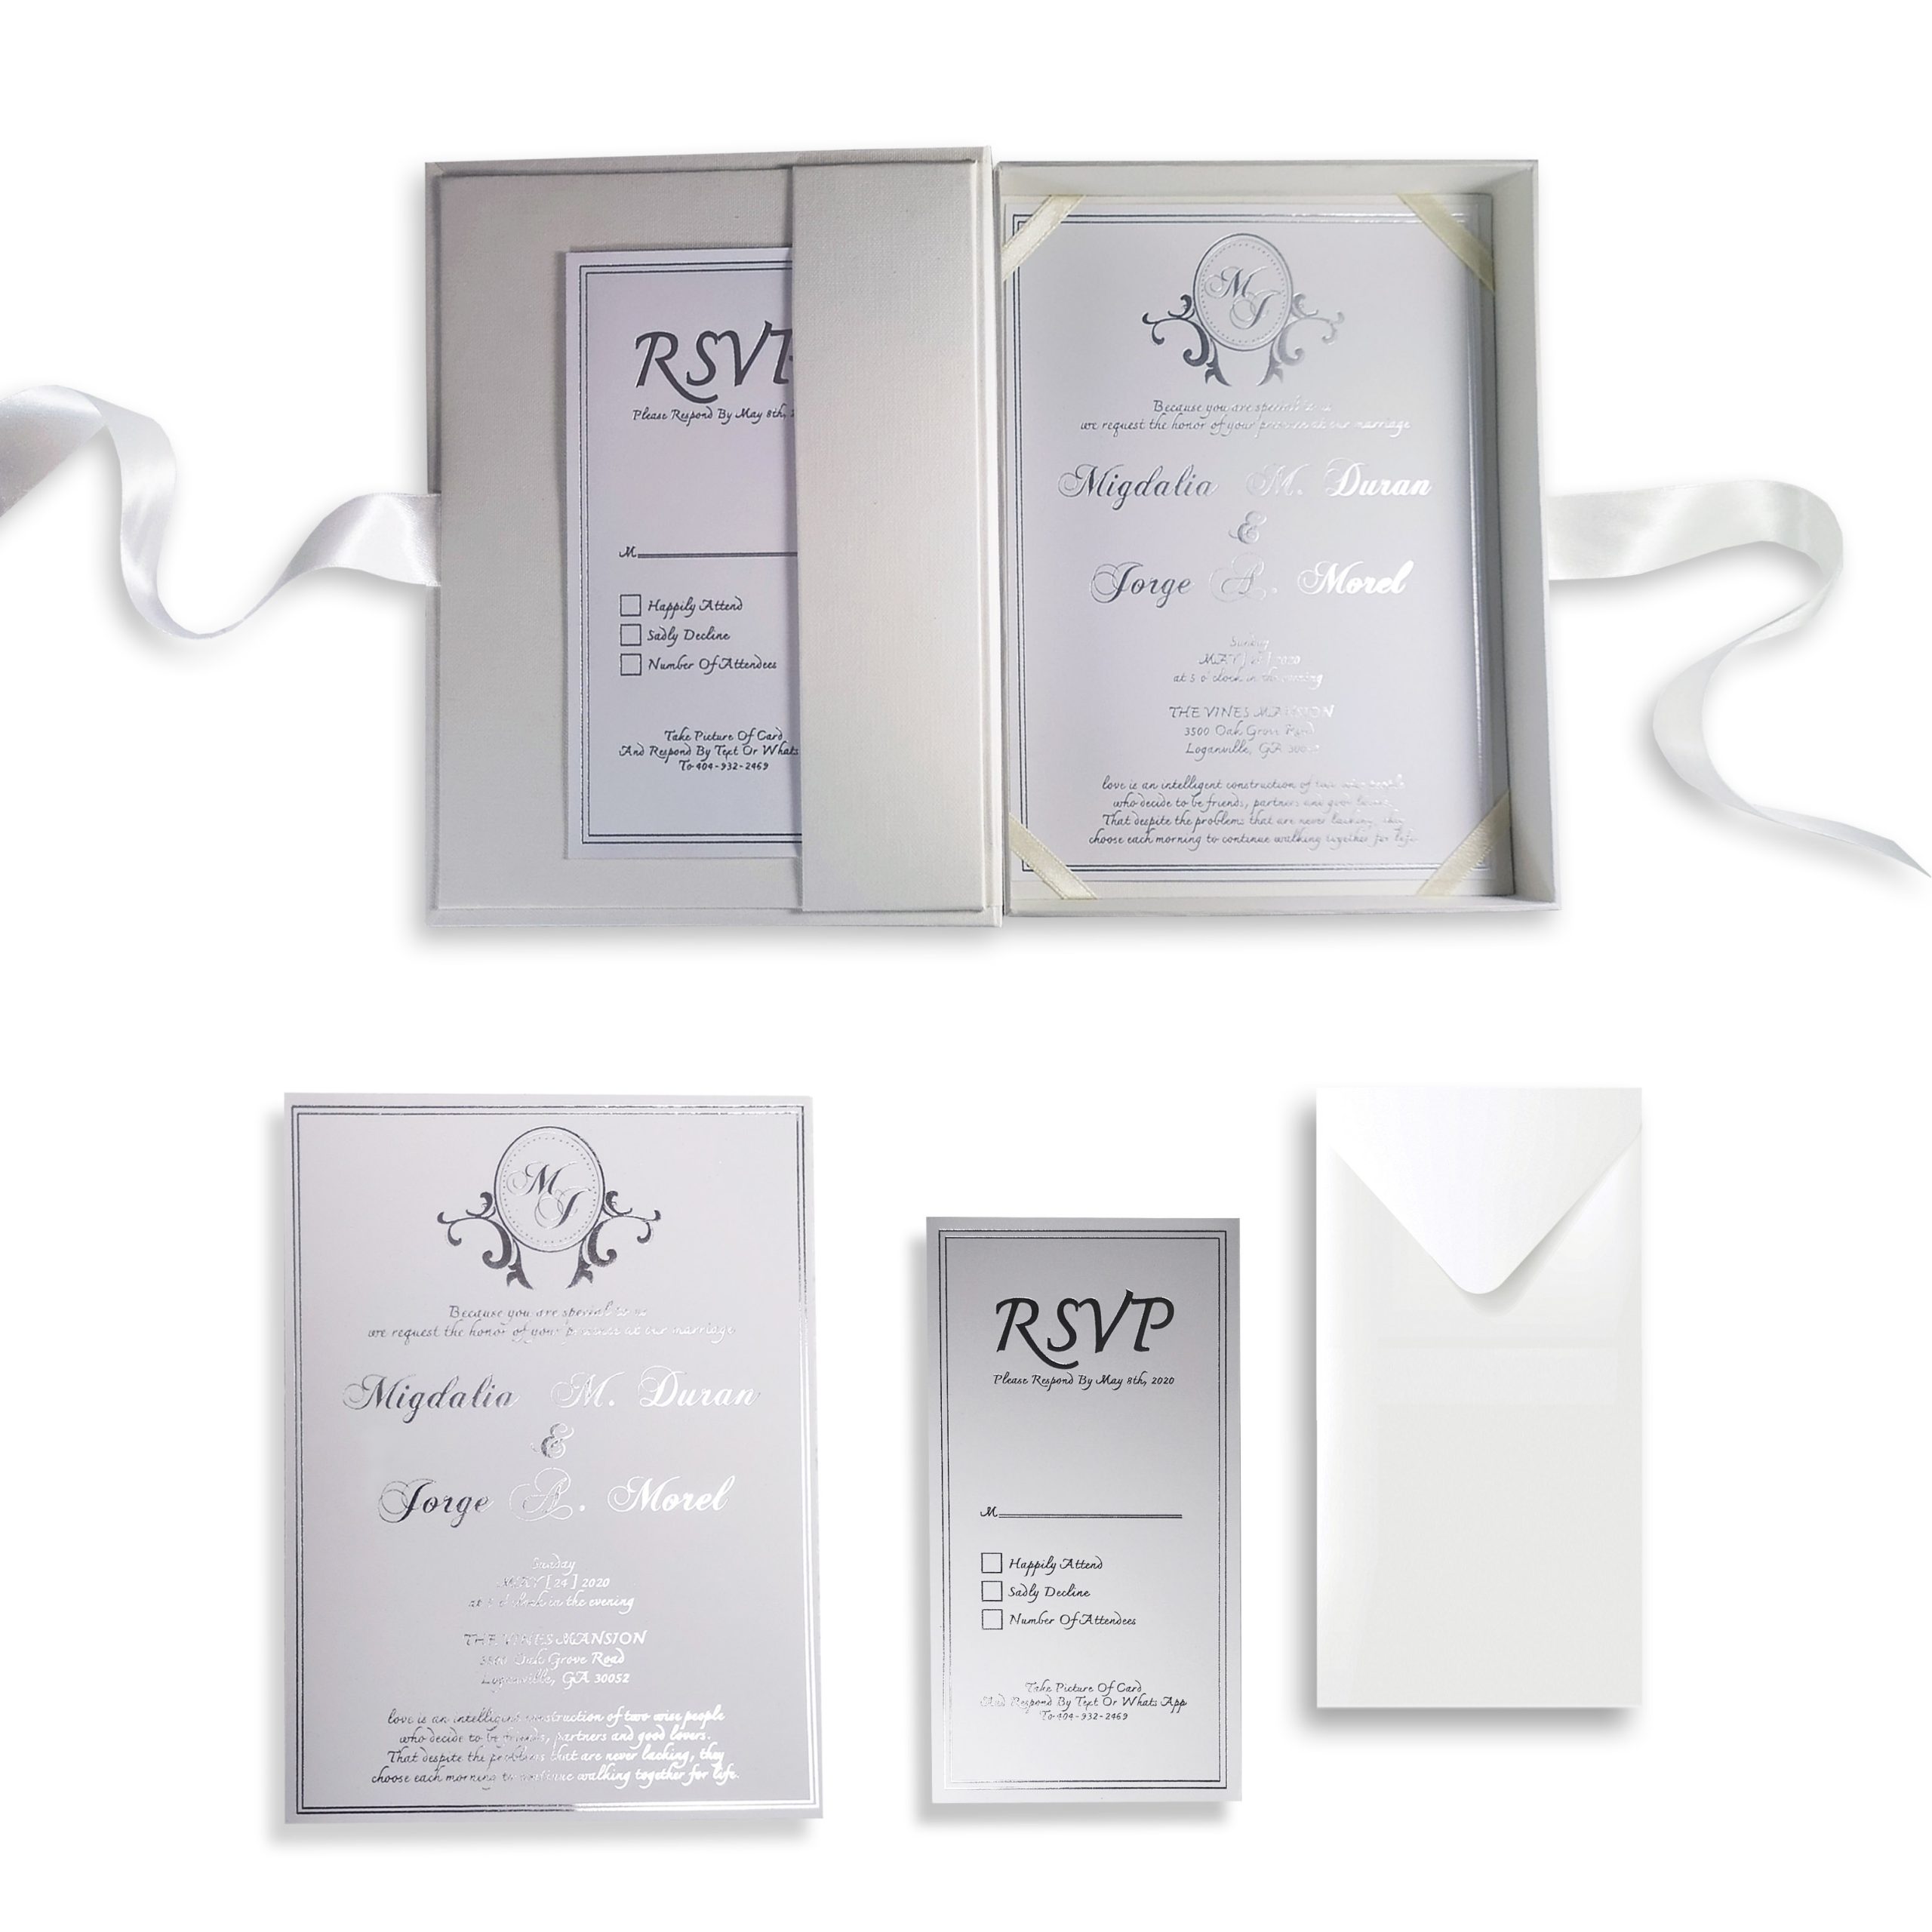 Boxed wedding invitation set